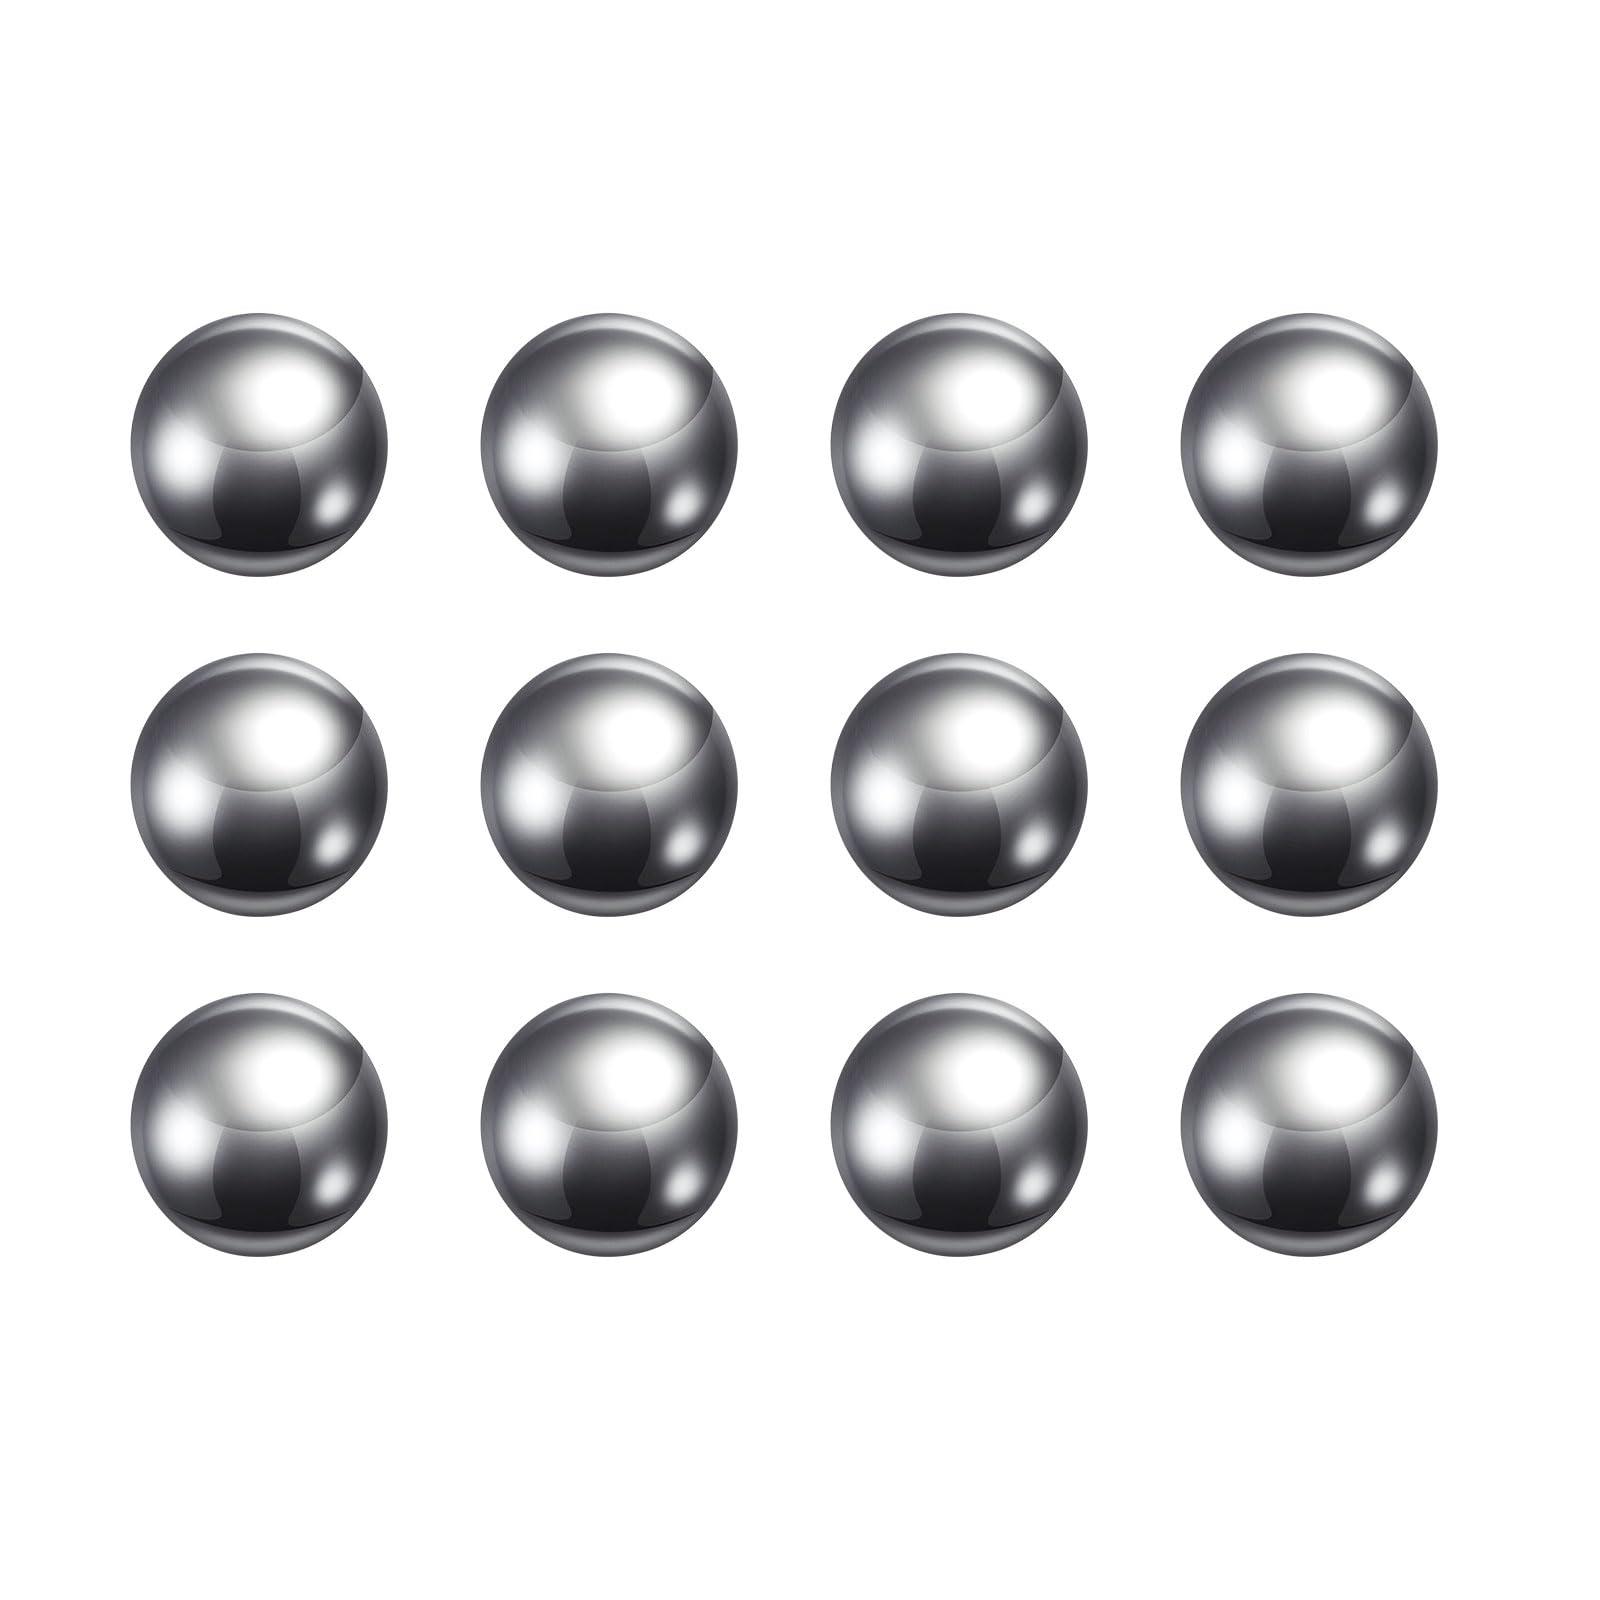 sourcing map 12pcs Precision Balls 16mm Diameter G10 Chrome Steel Ball for Bearings, Silver